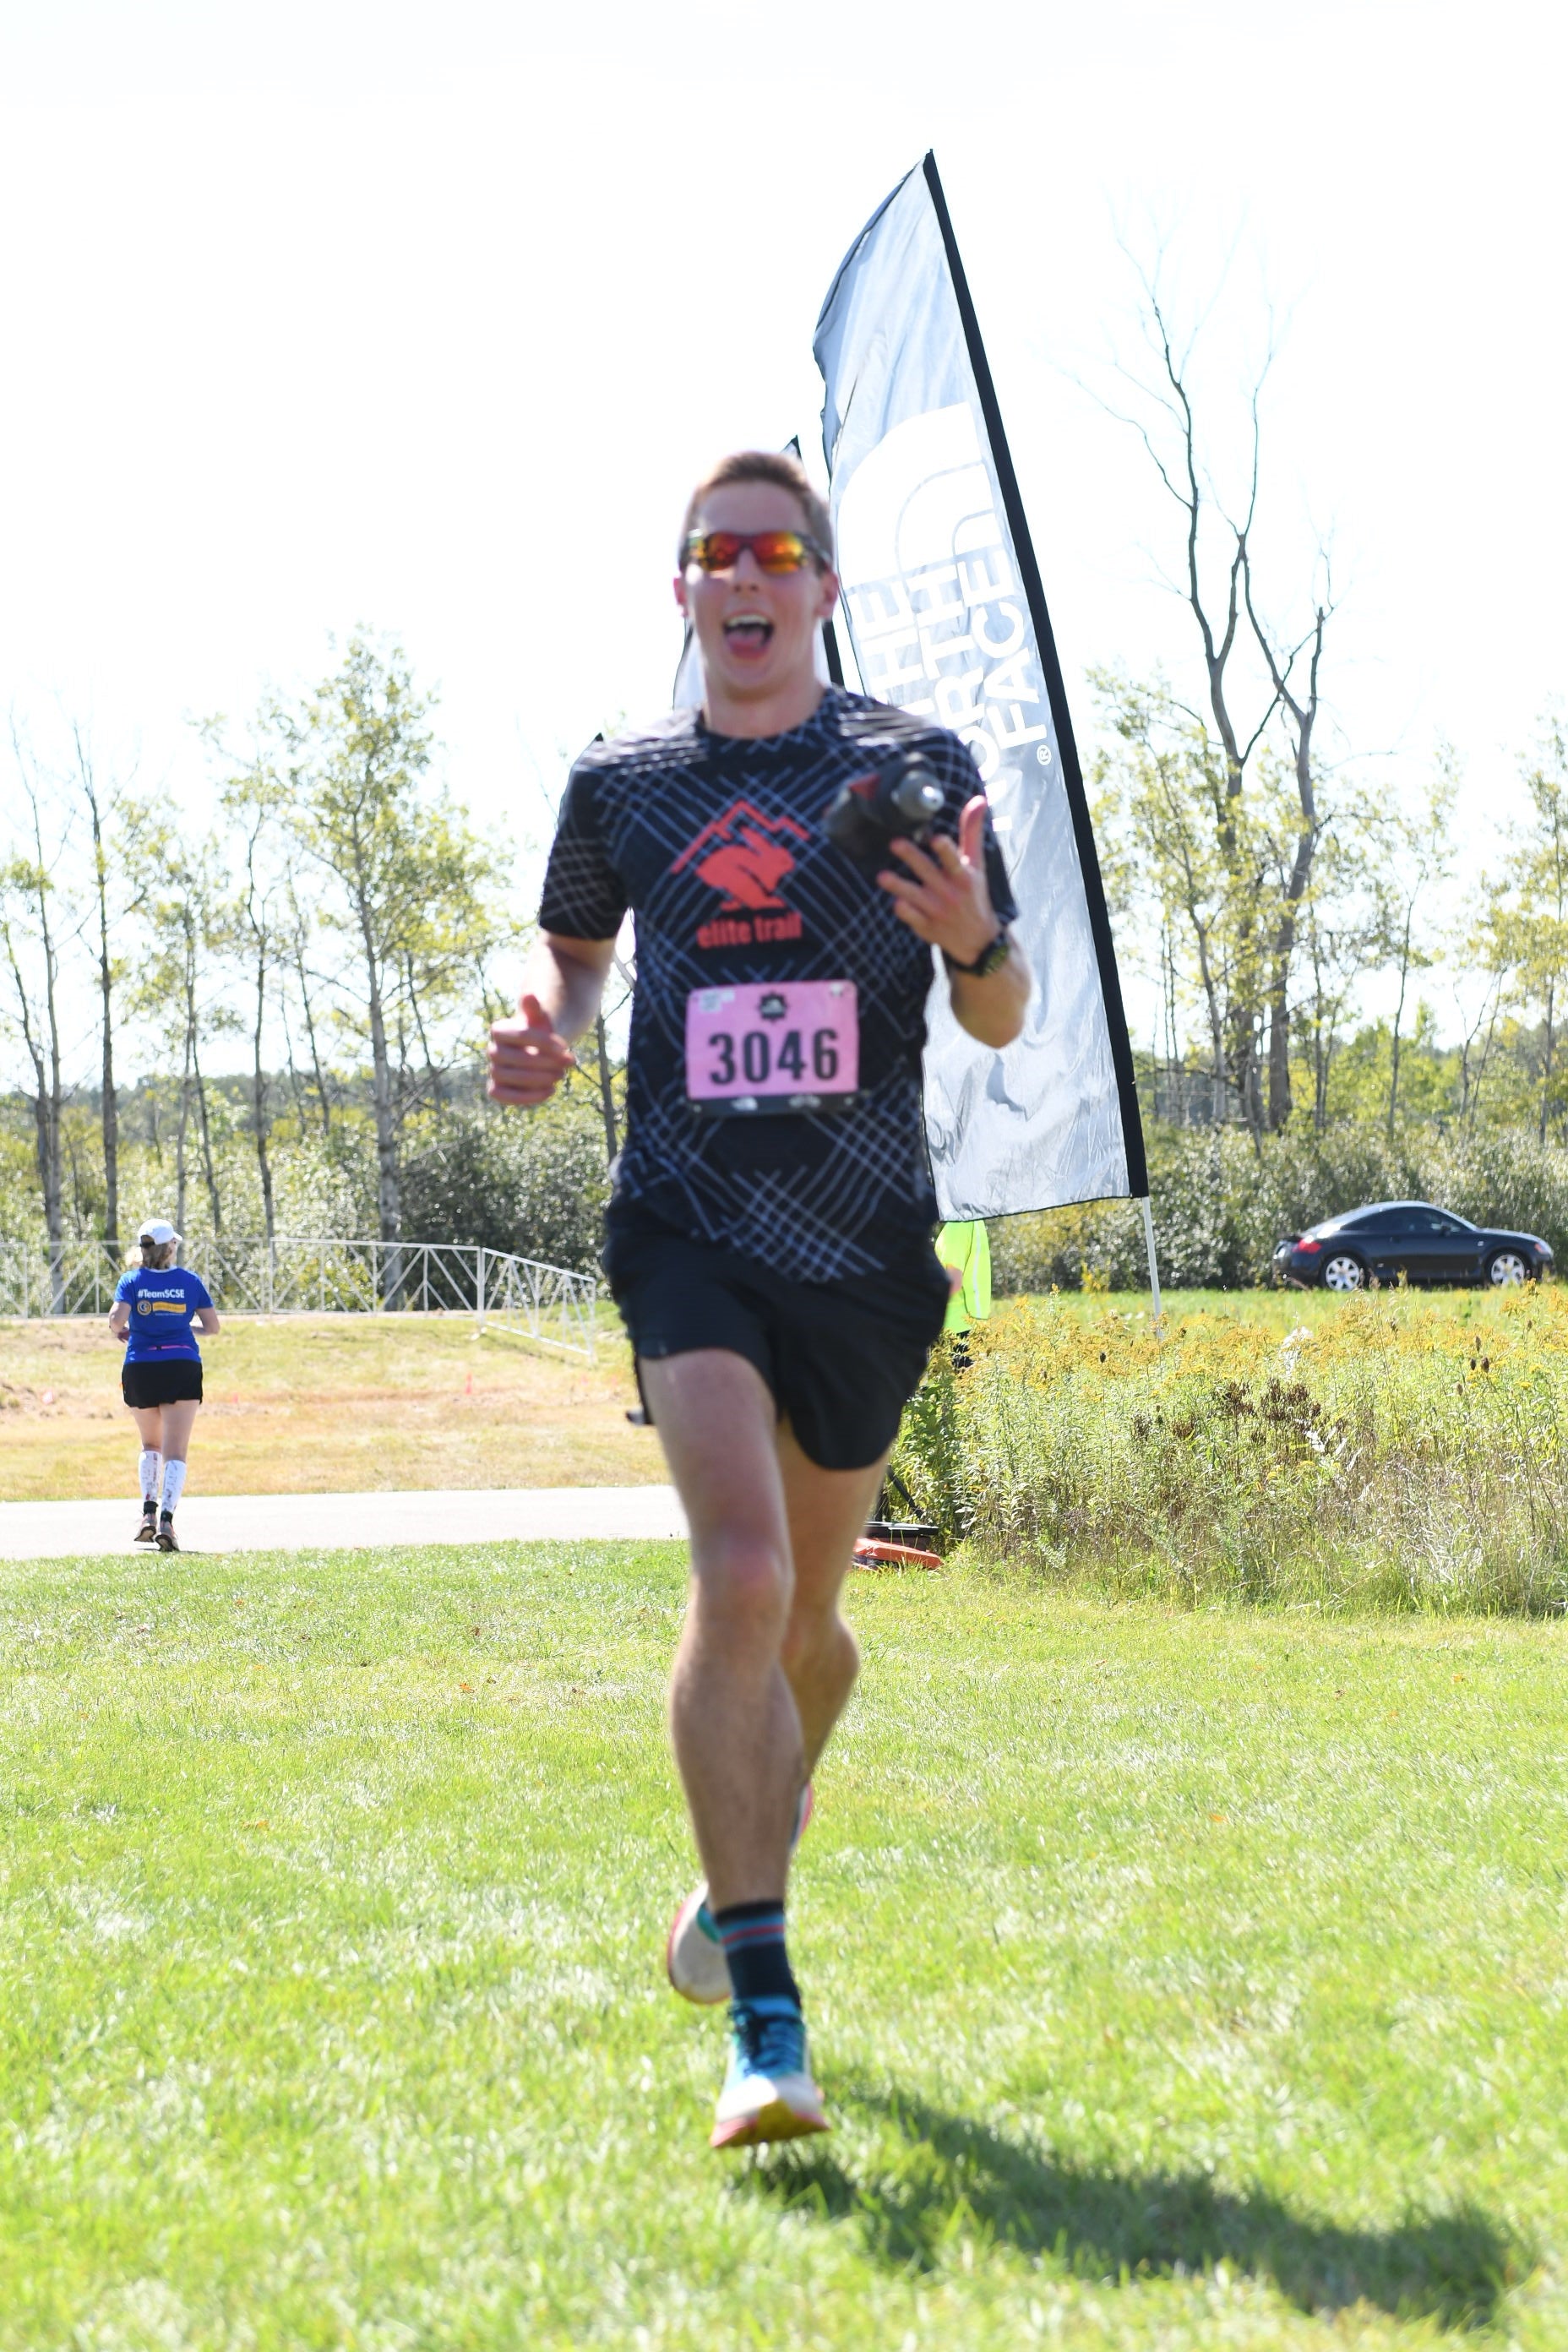 rabbitELITE trail athlete Wes Judd continues winning ways